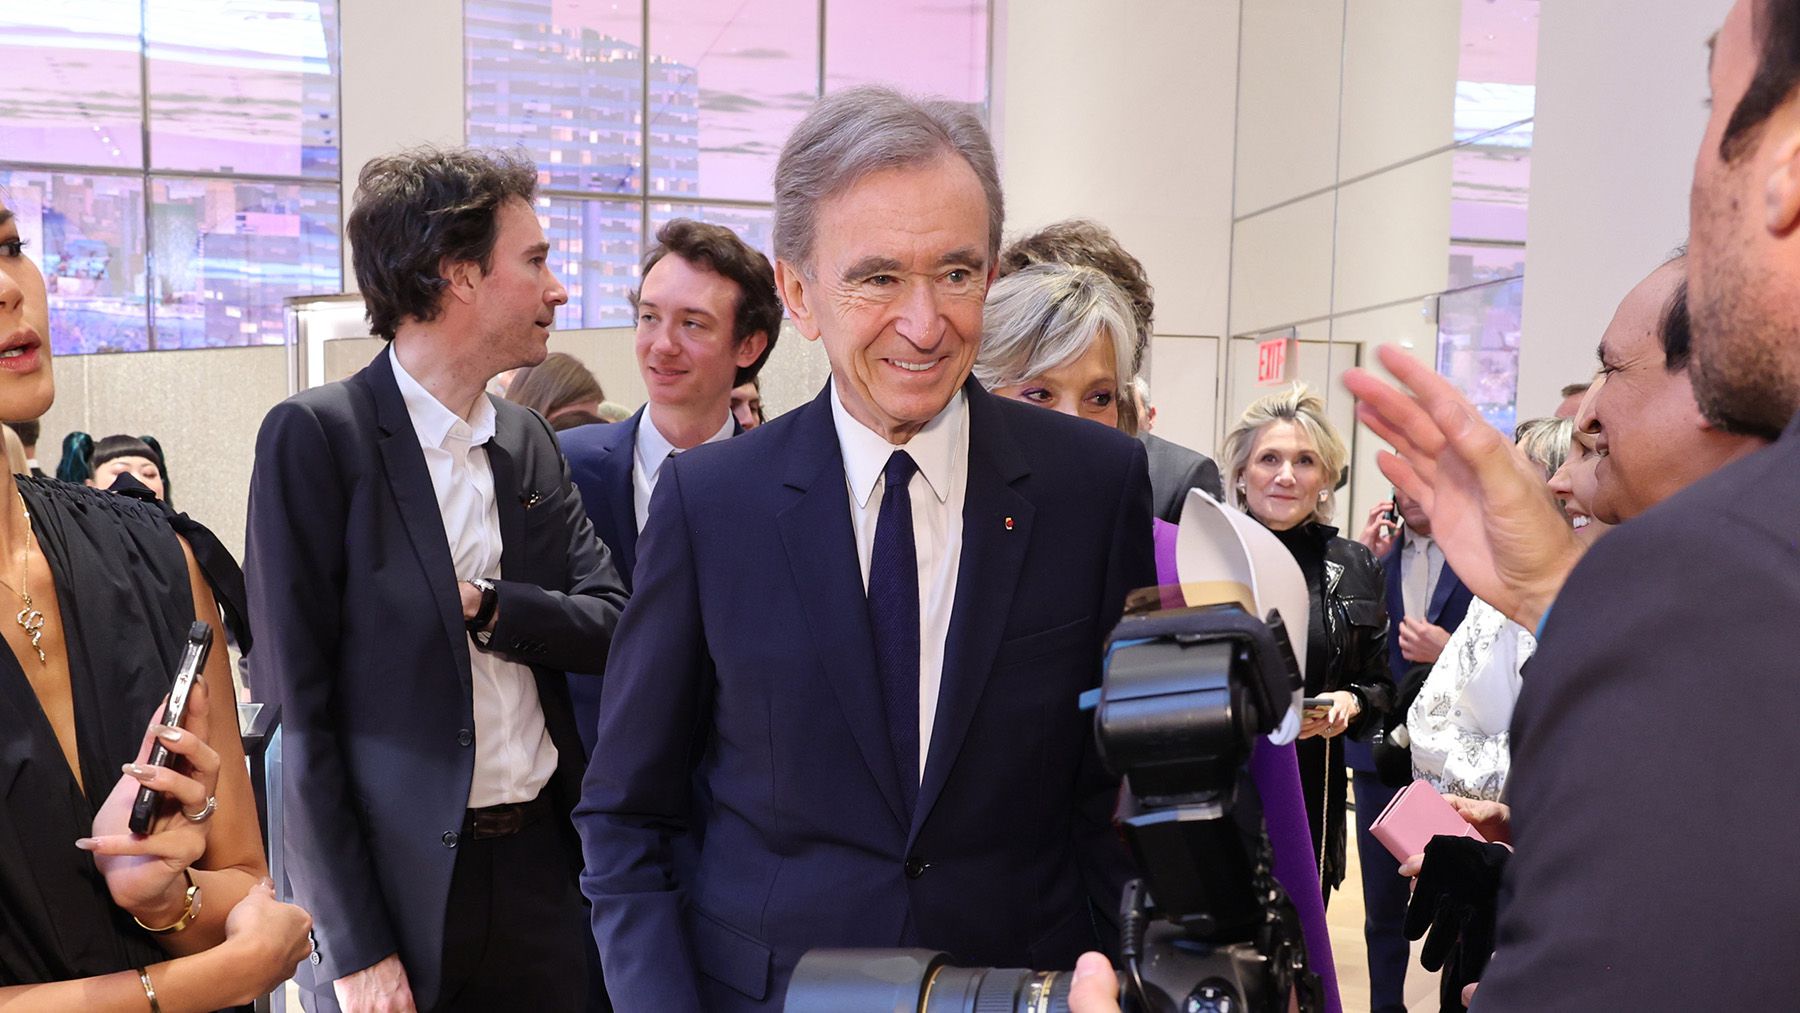 LVMH Billionaire Bernard Arnault Says He’s Confident About US Economy, At Star-Studded Tiffany Event